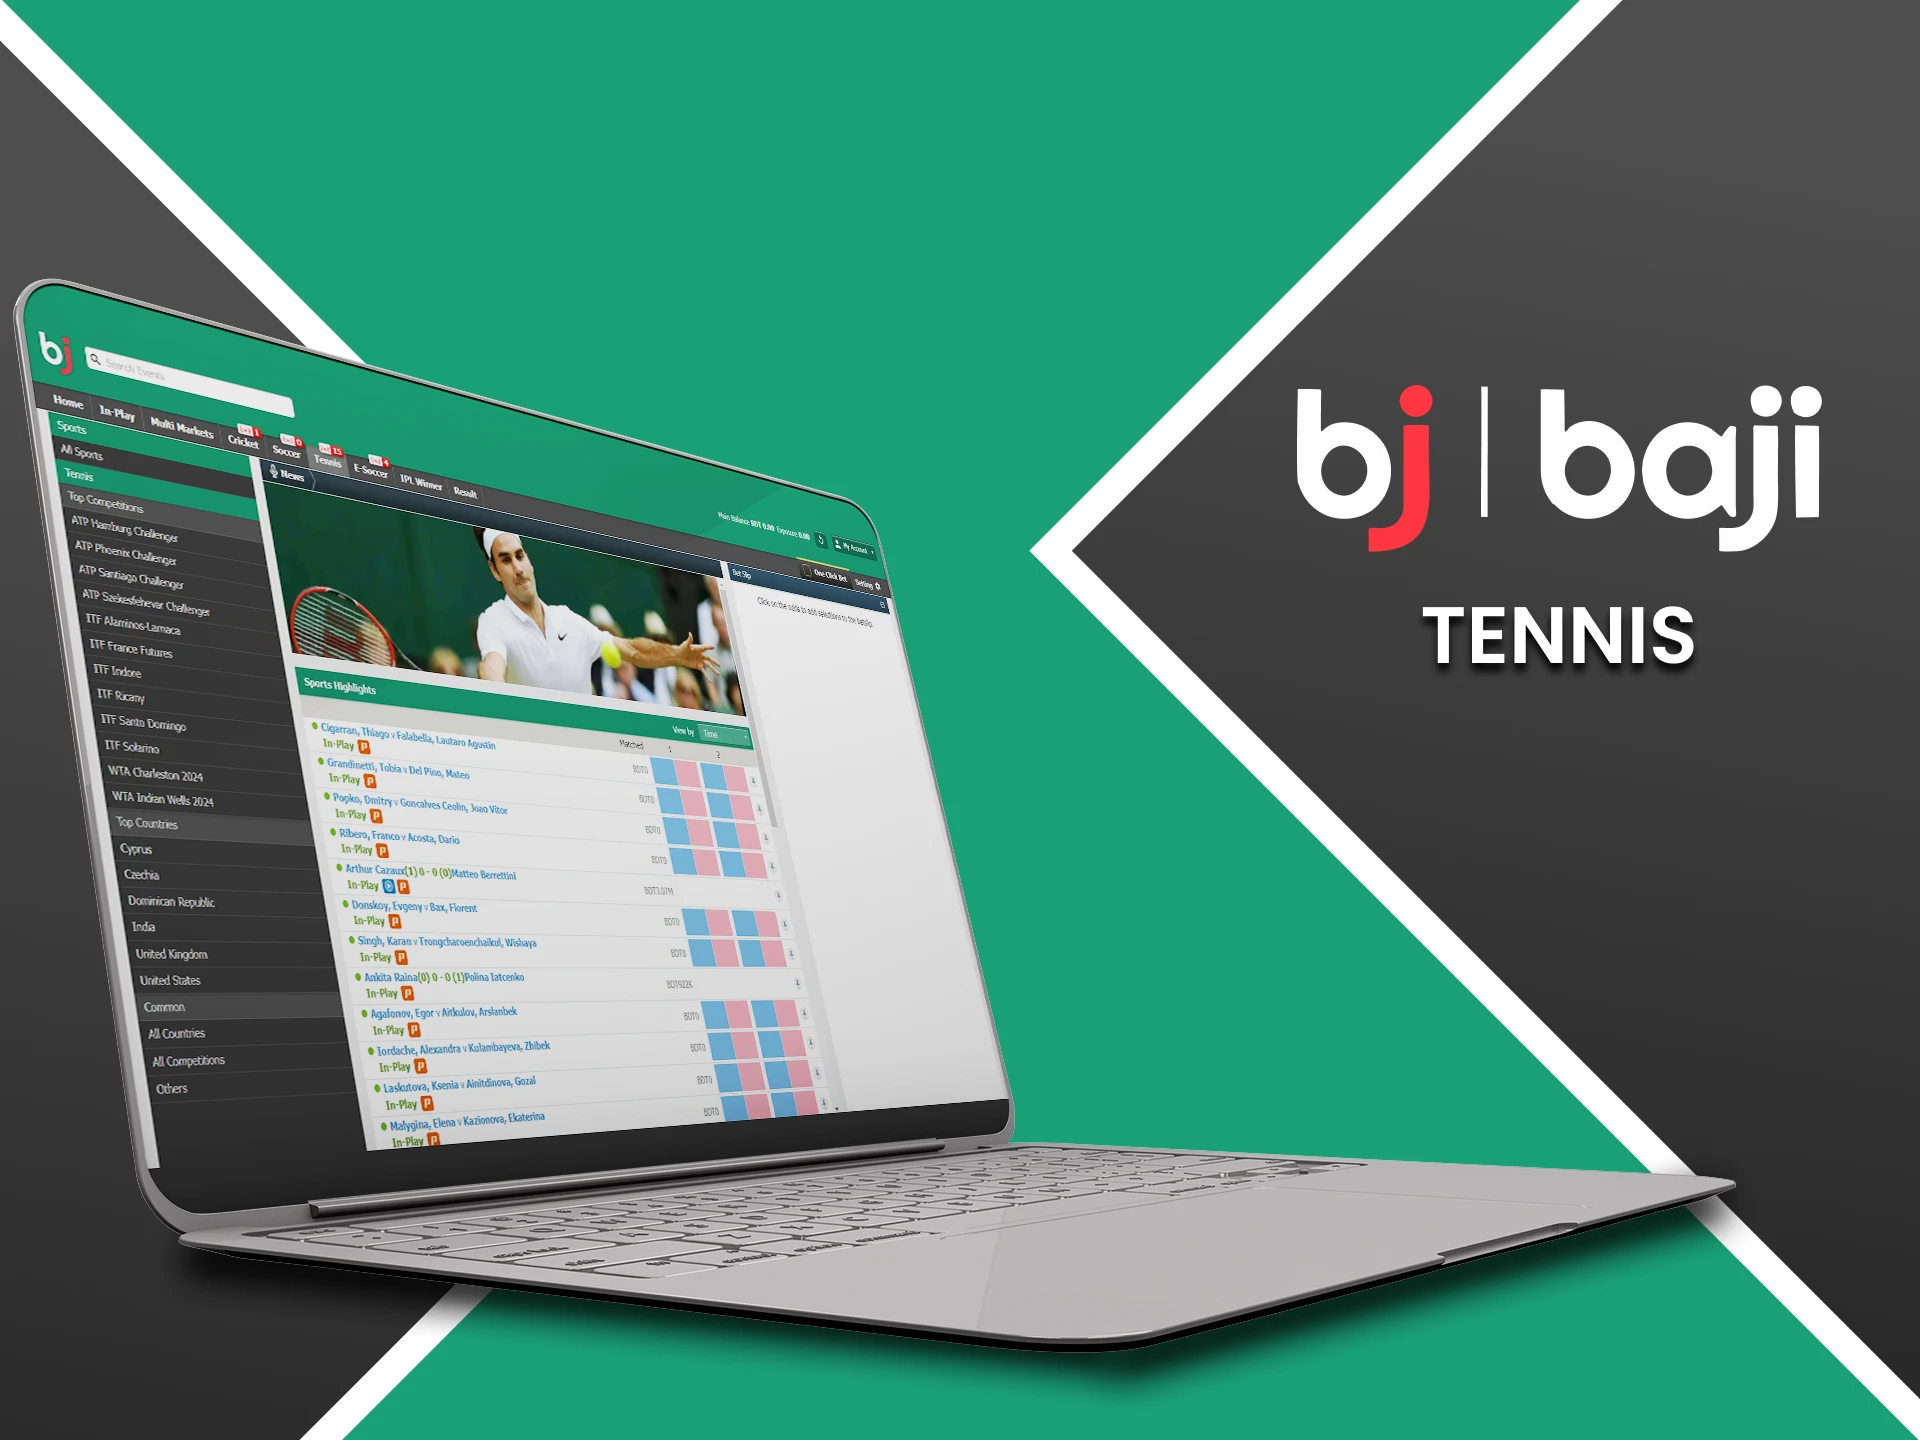 When betting on Baji, choose tennis.